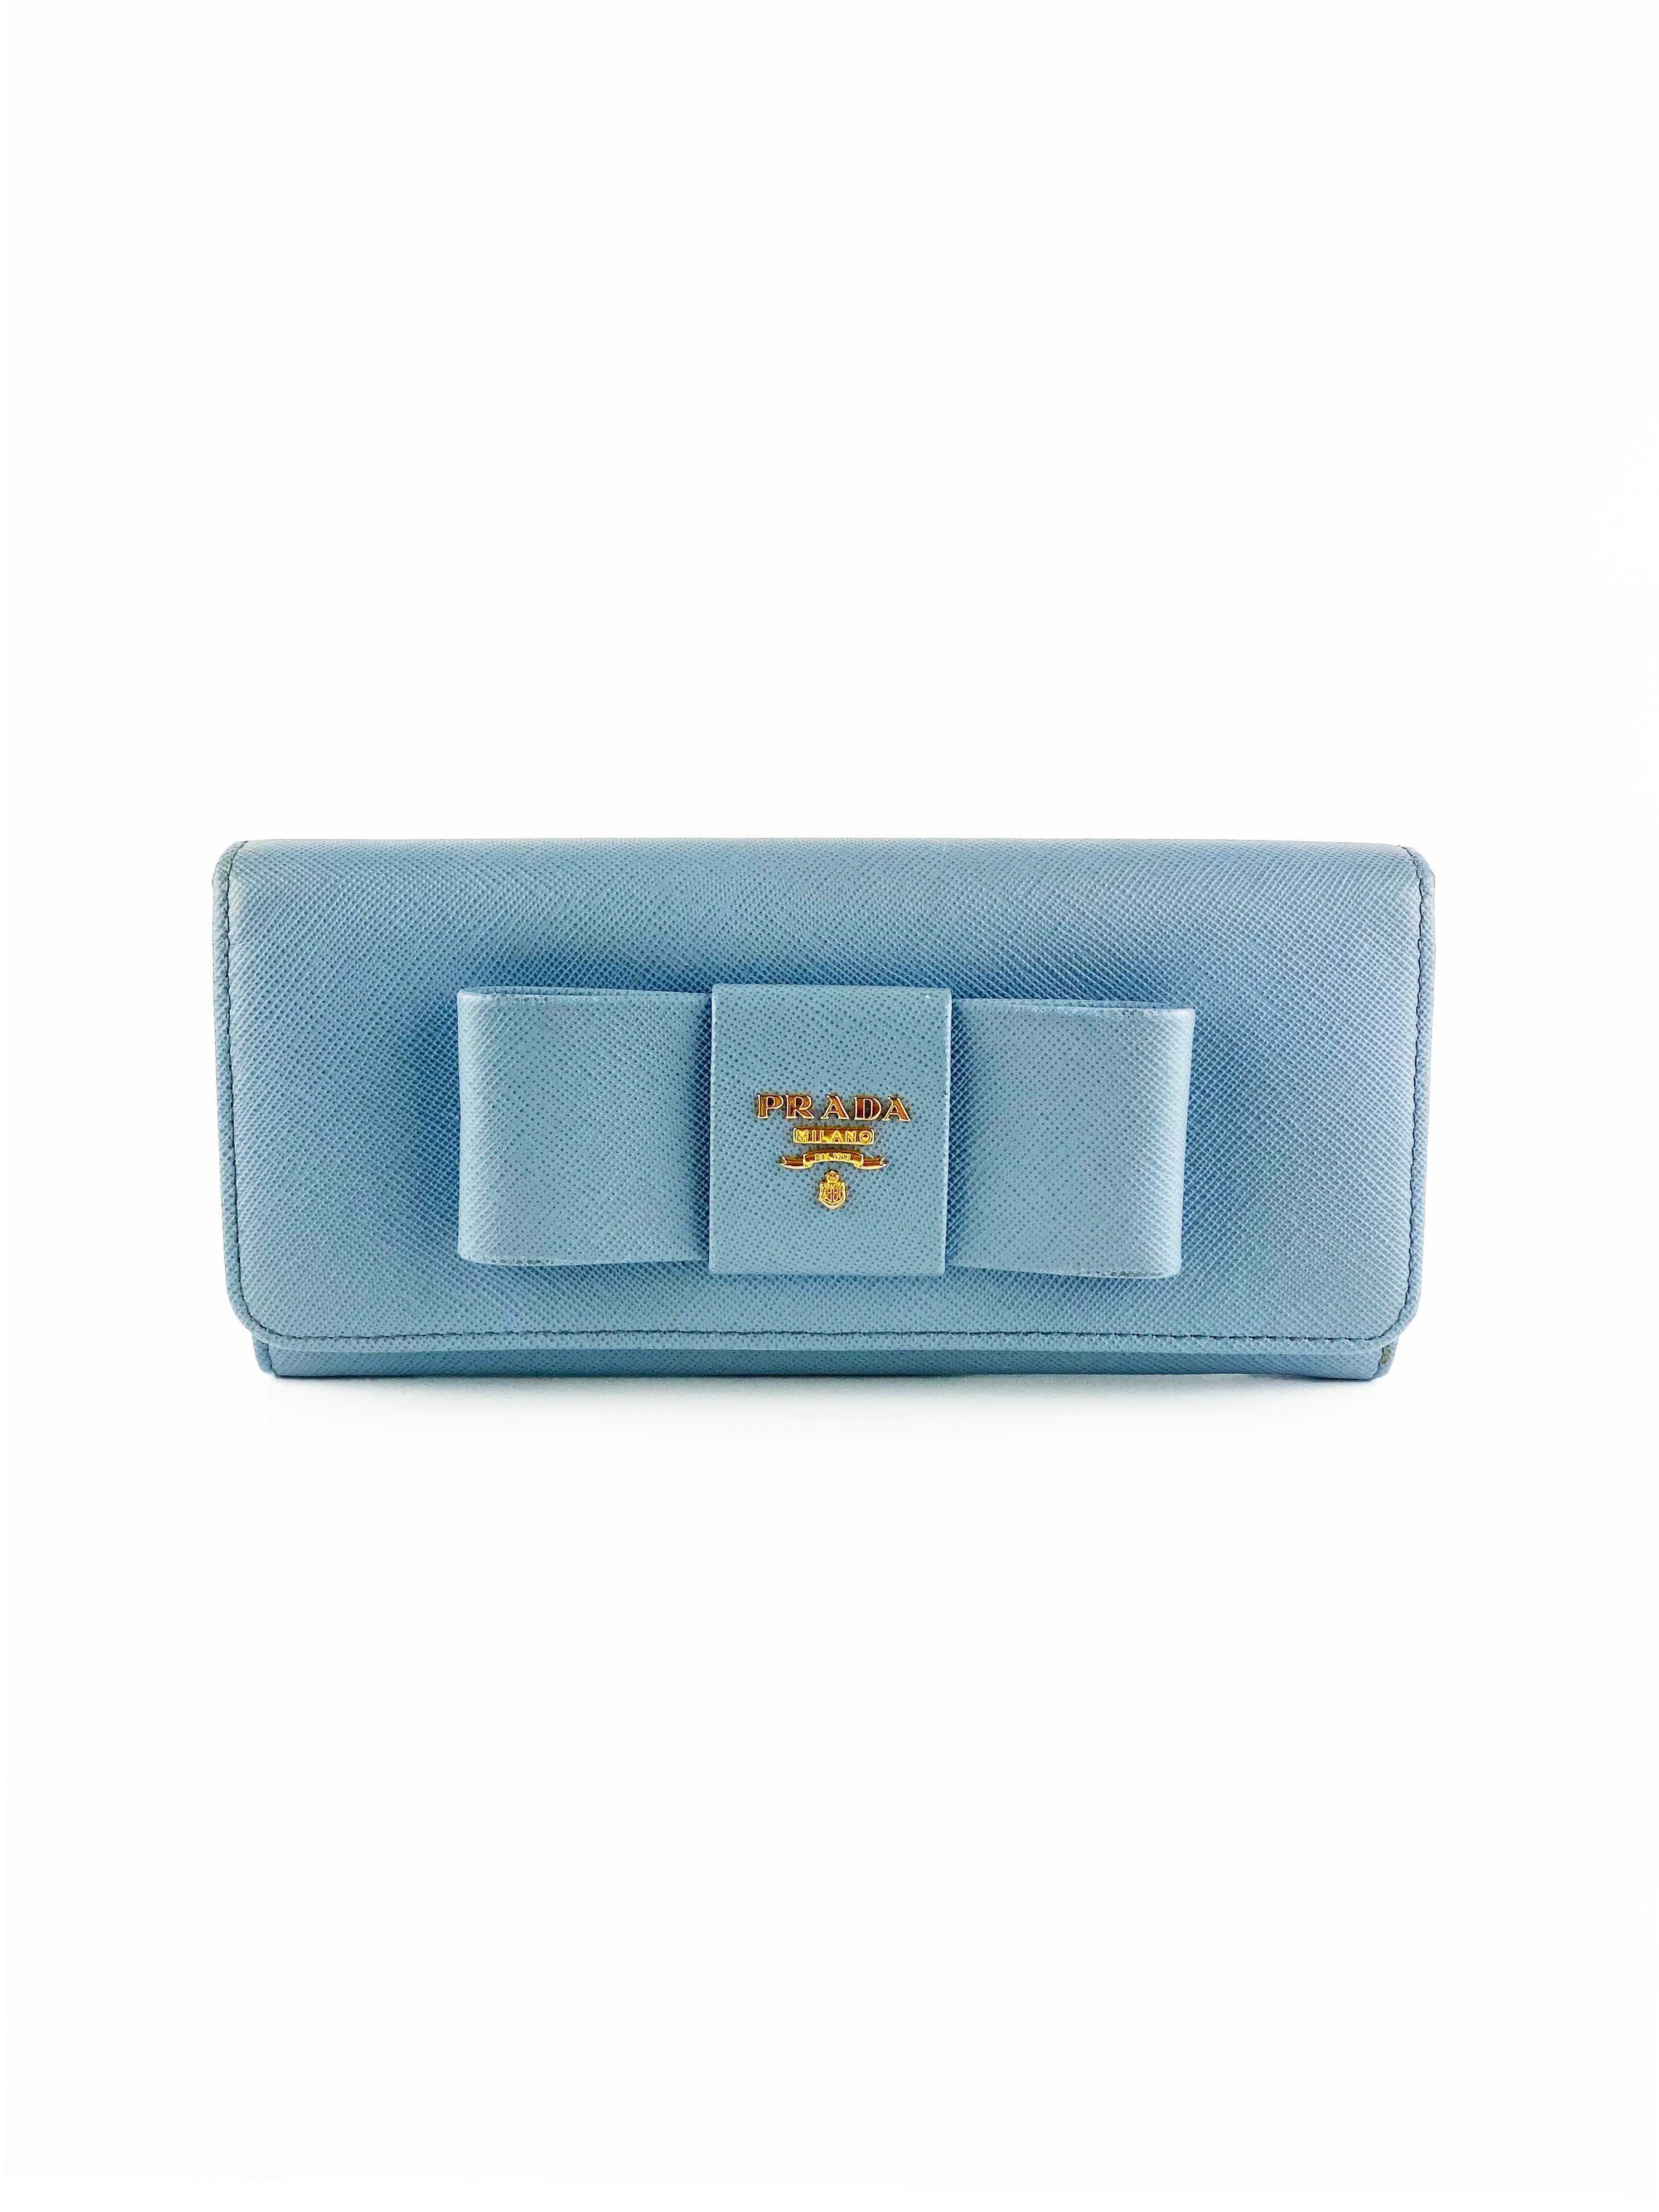 prada-baby-blue-saffiano-wallet-7.jpg